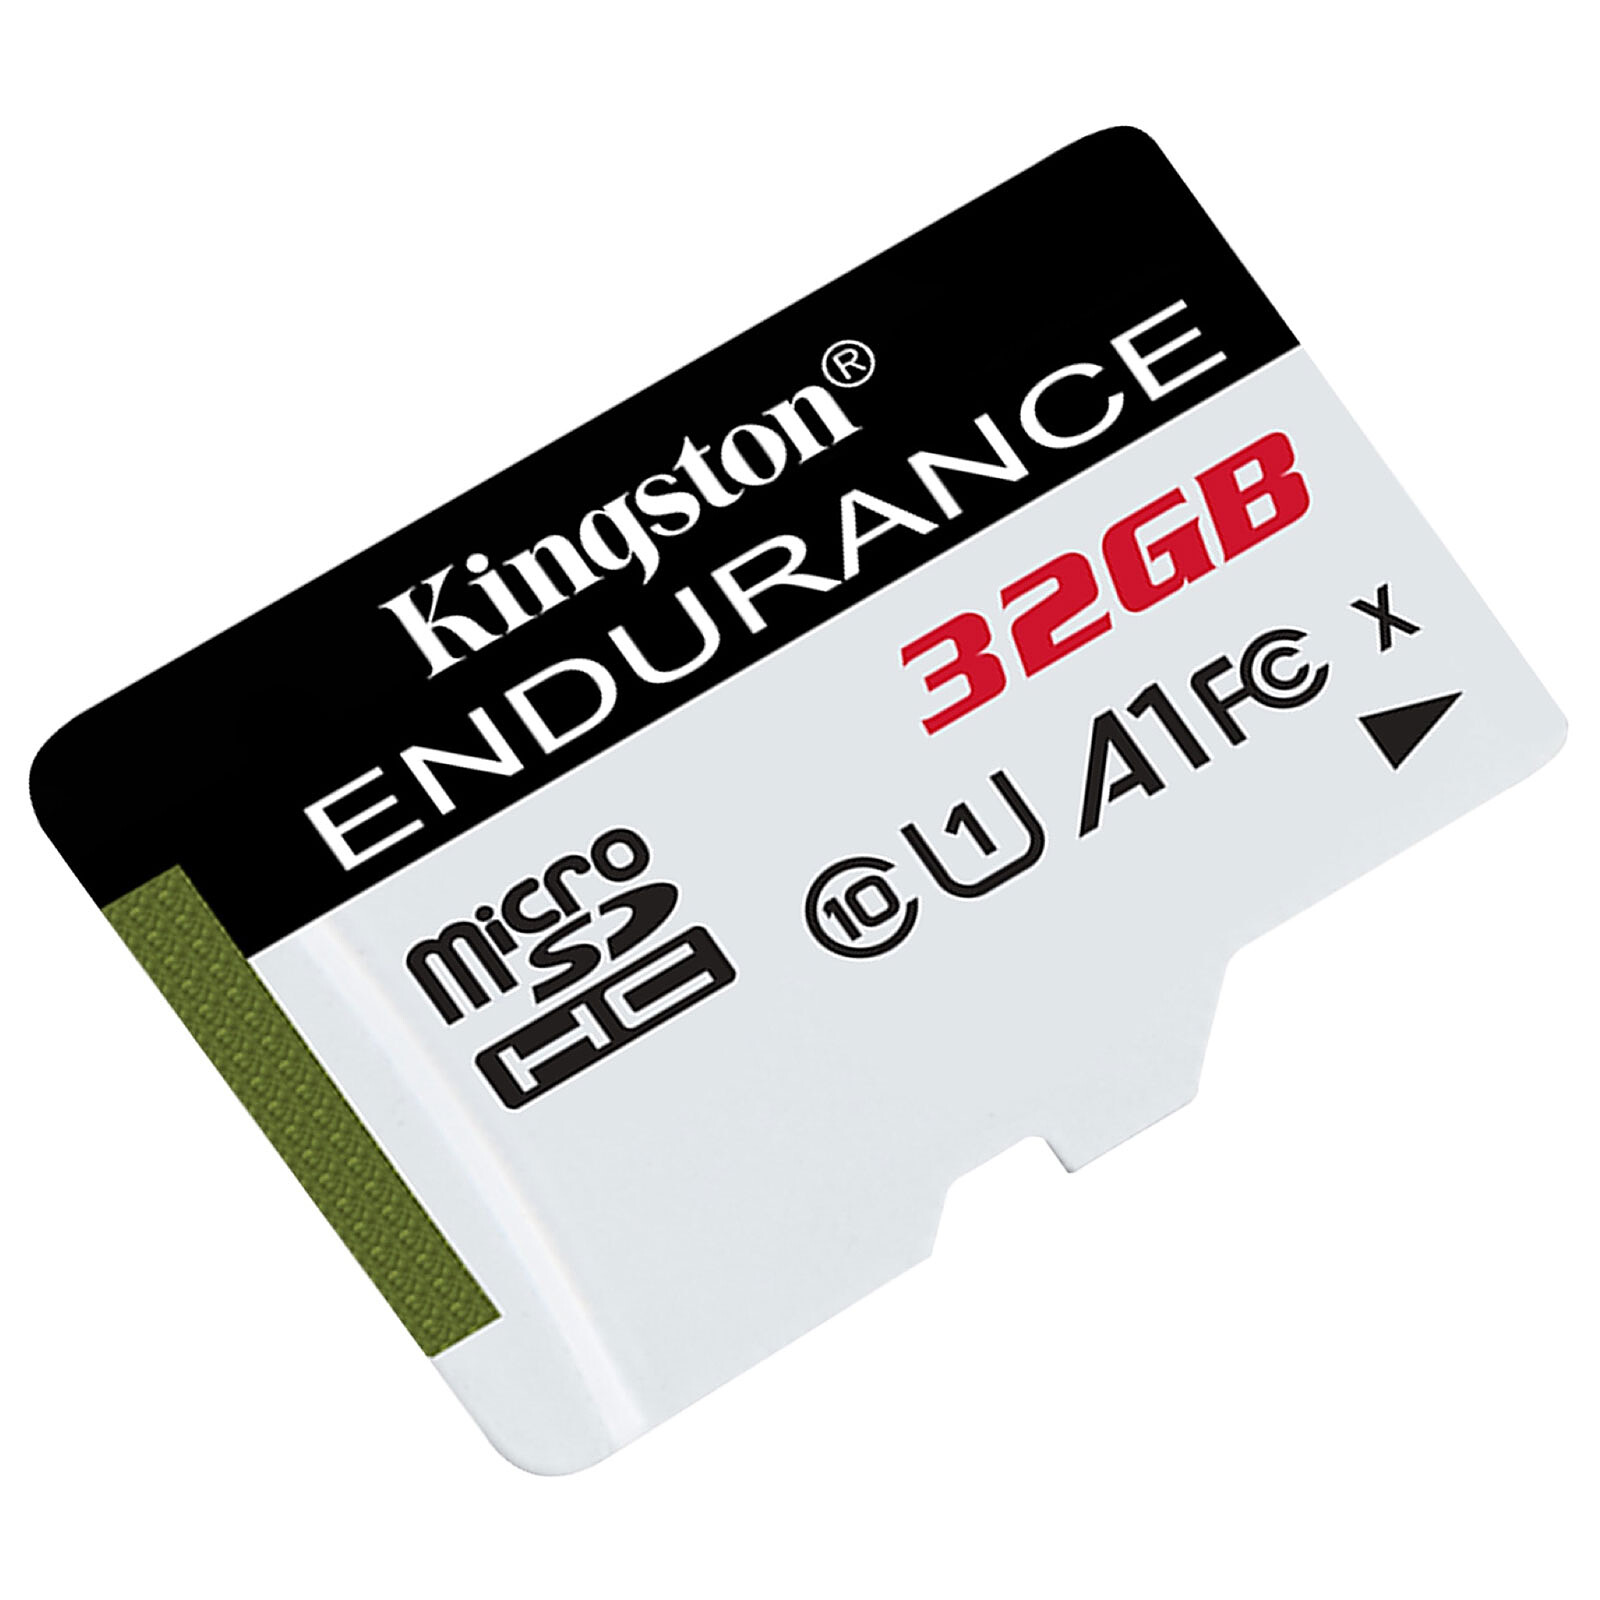 Kingston Endurance SDCE/32GB - Memory card - LDLC 3-year warranty